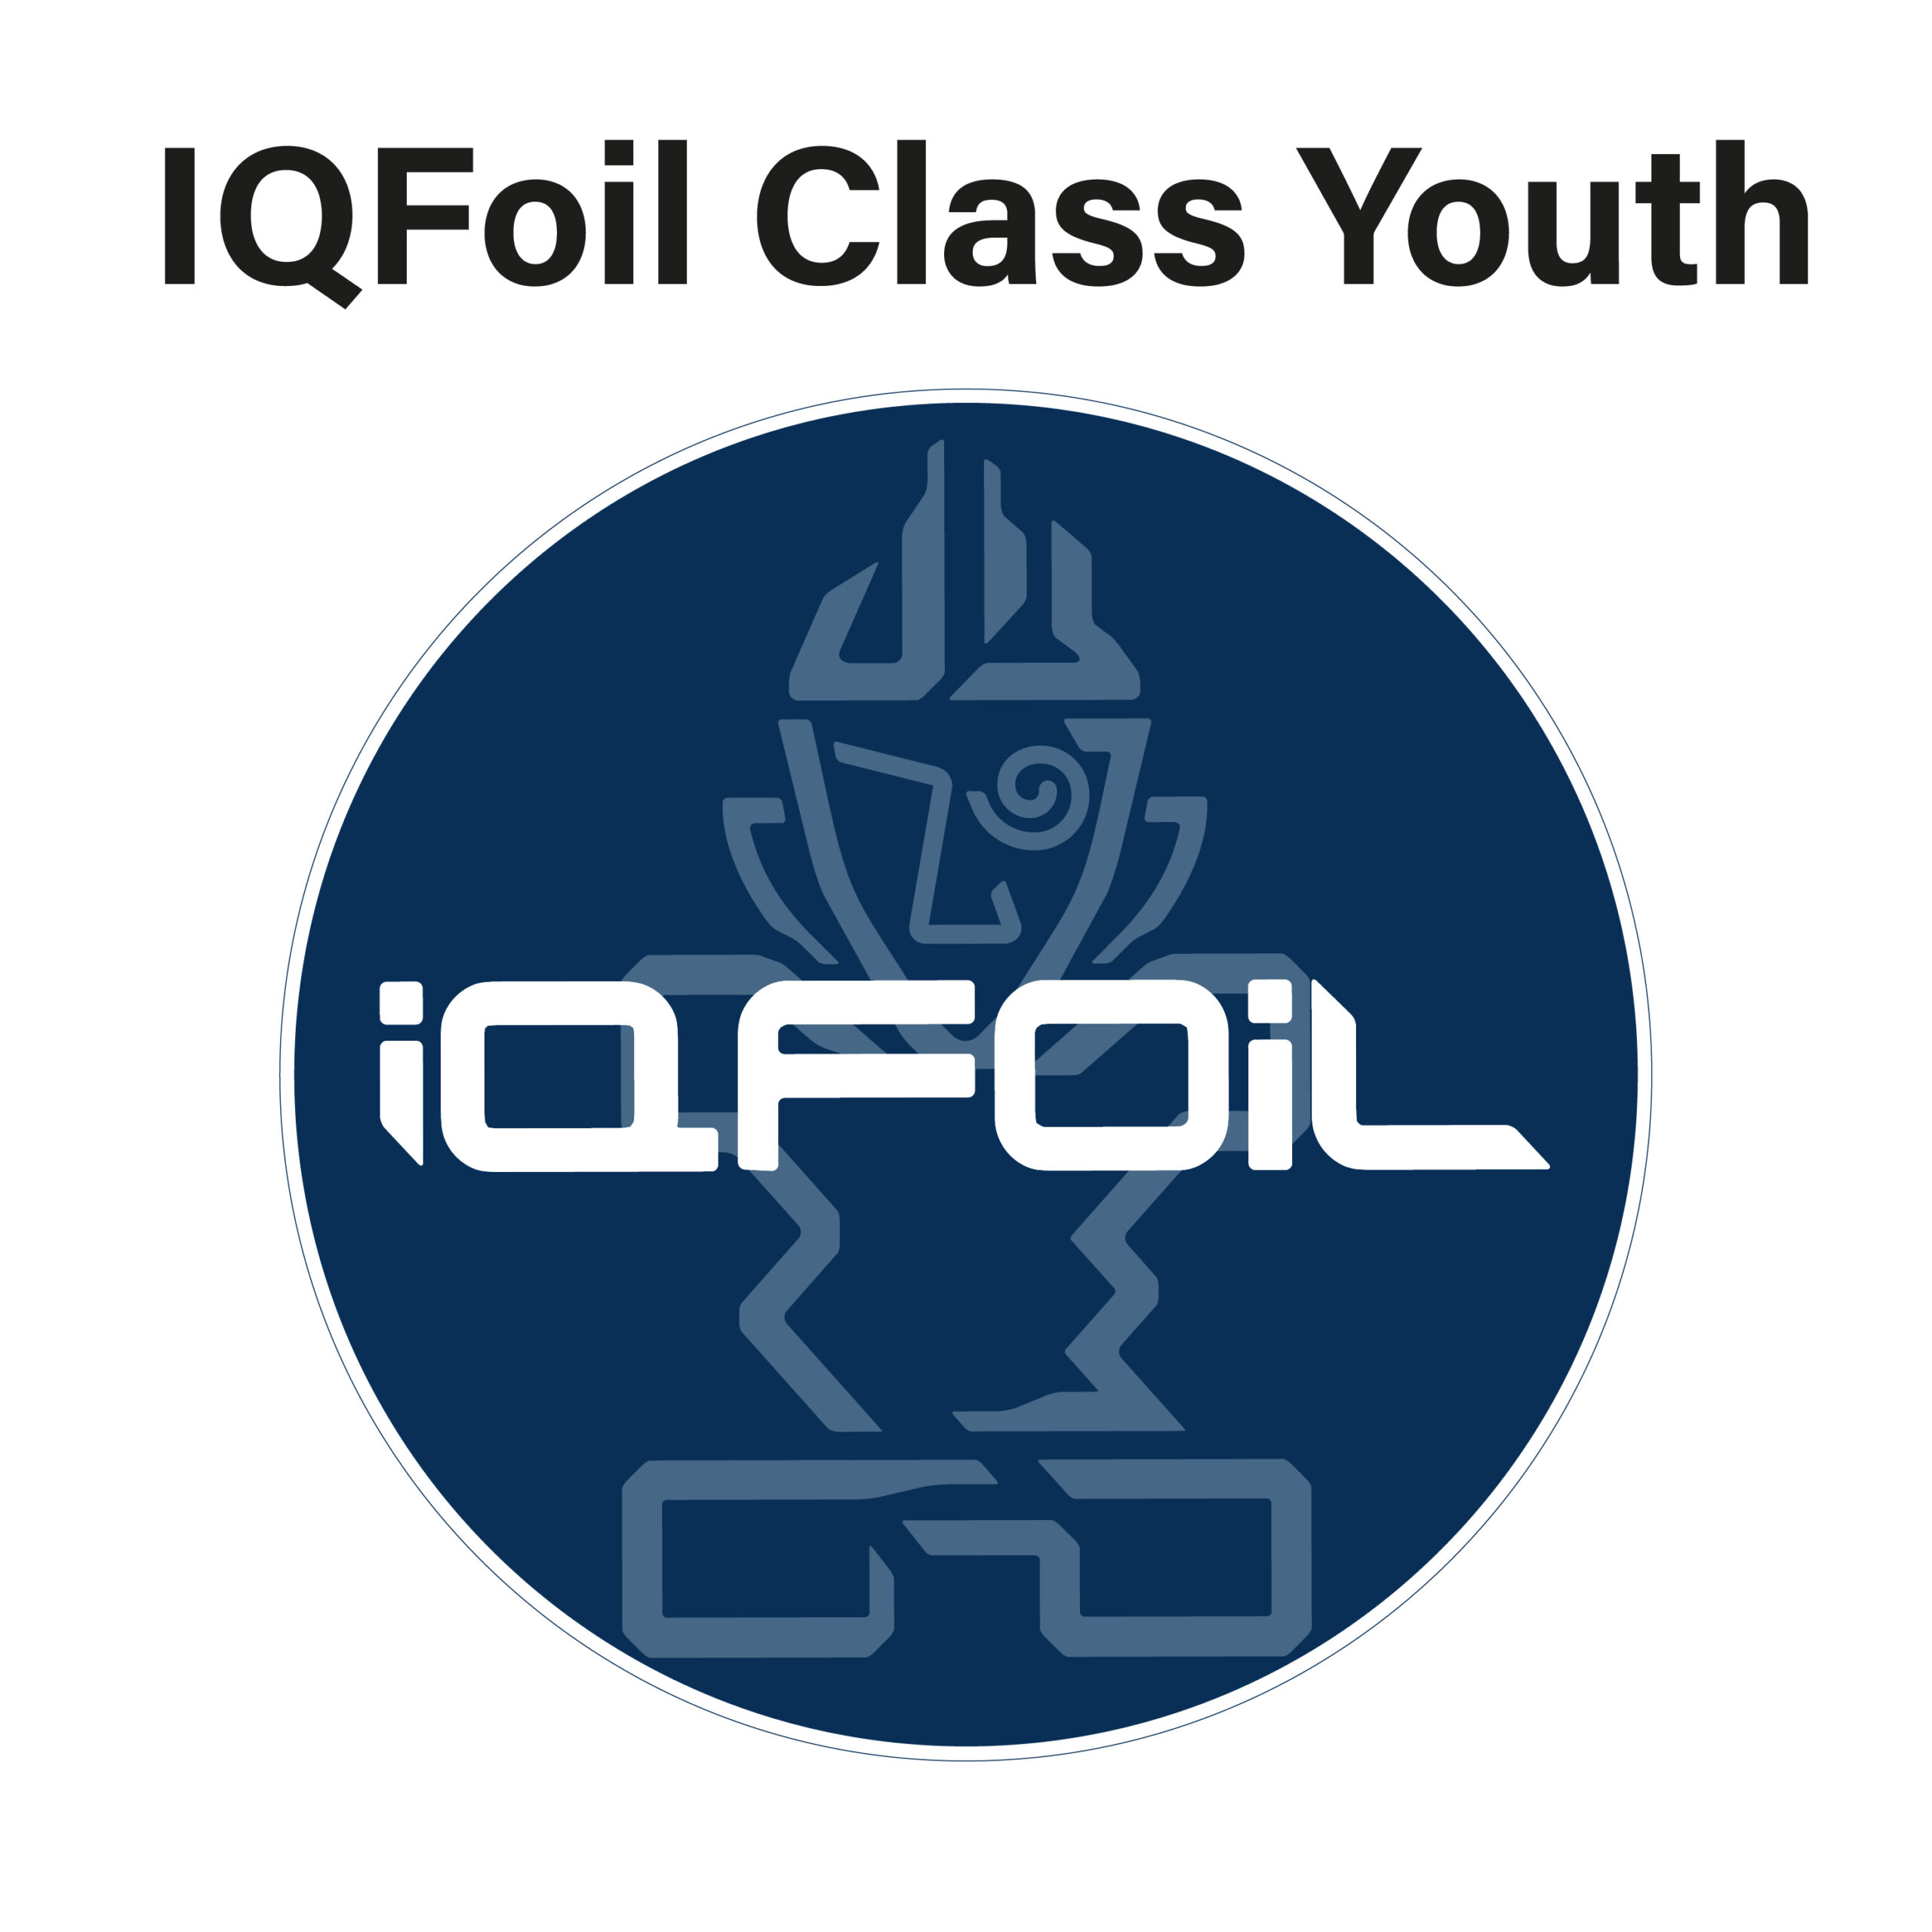 IQ Foil Class Youth